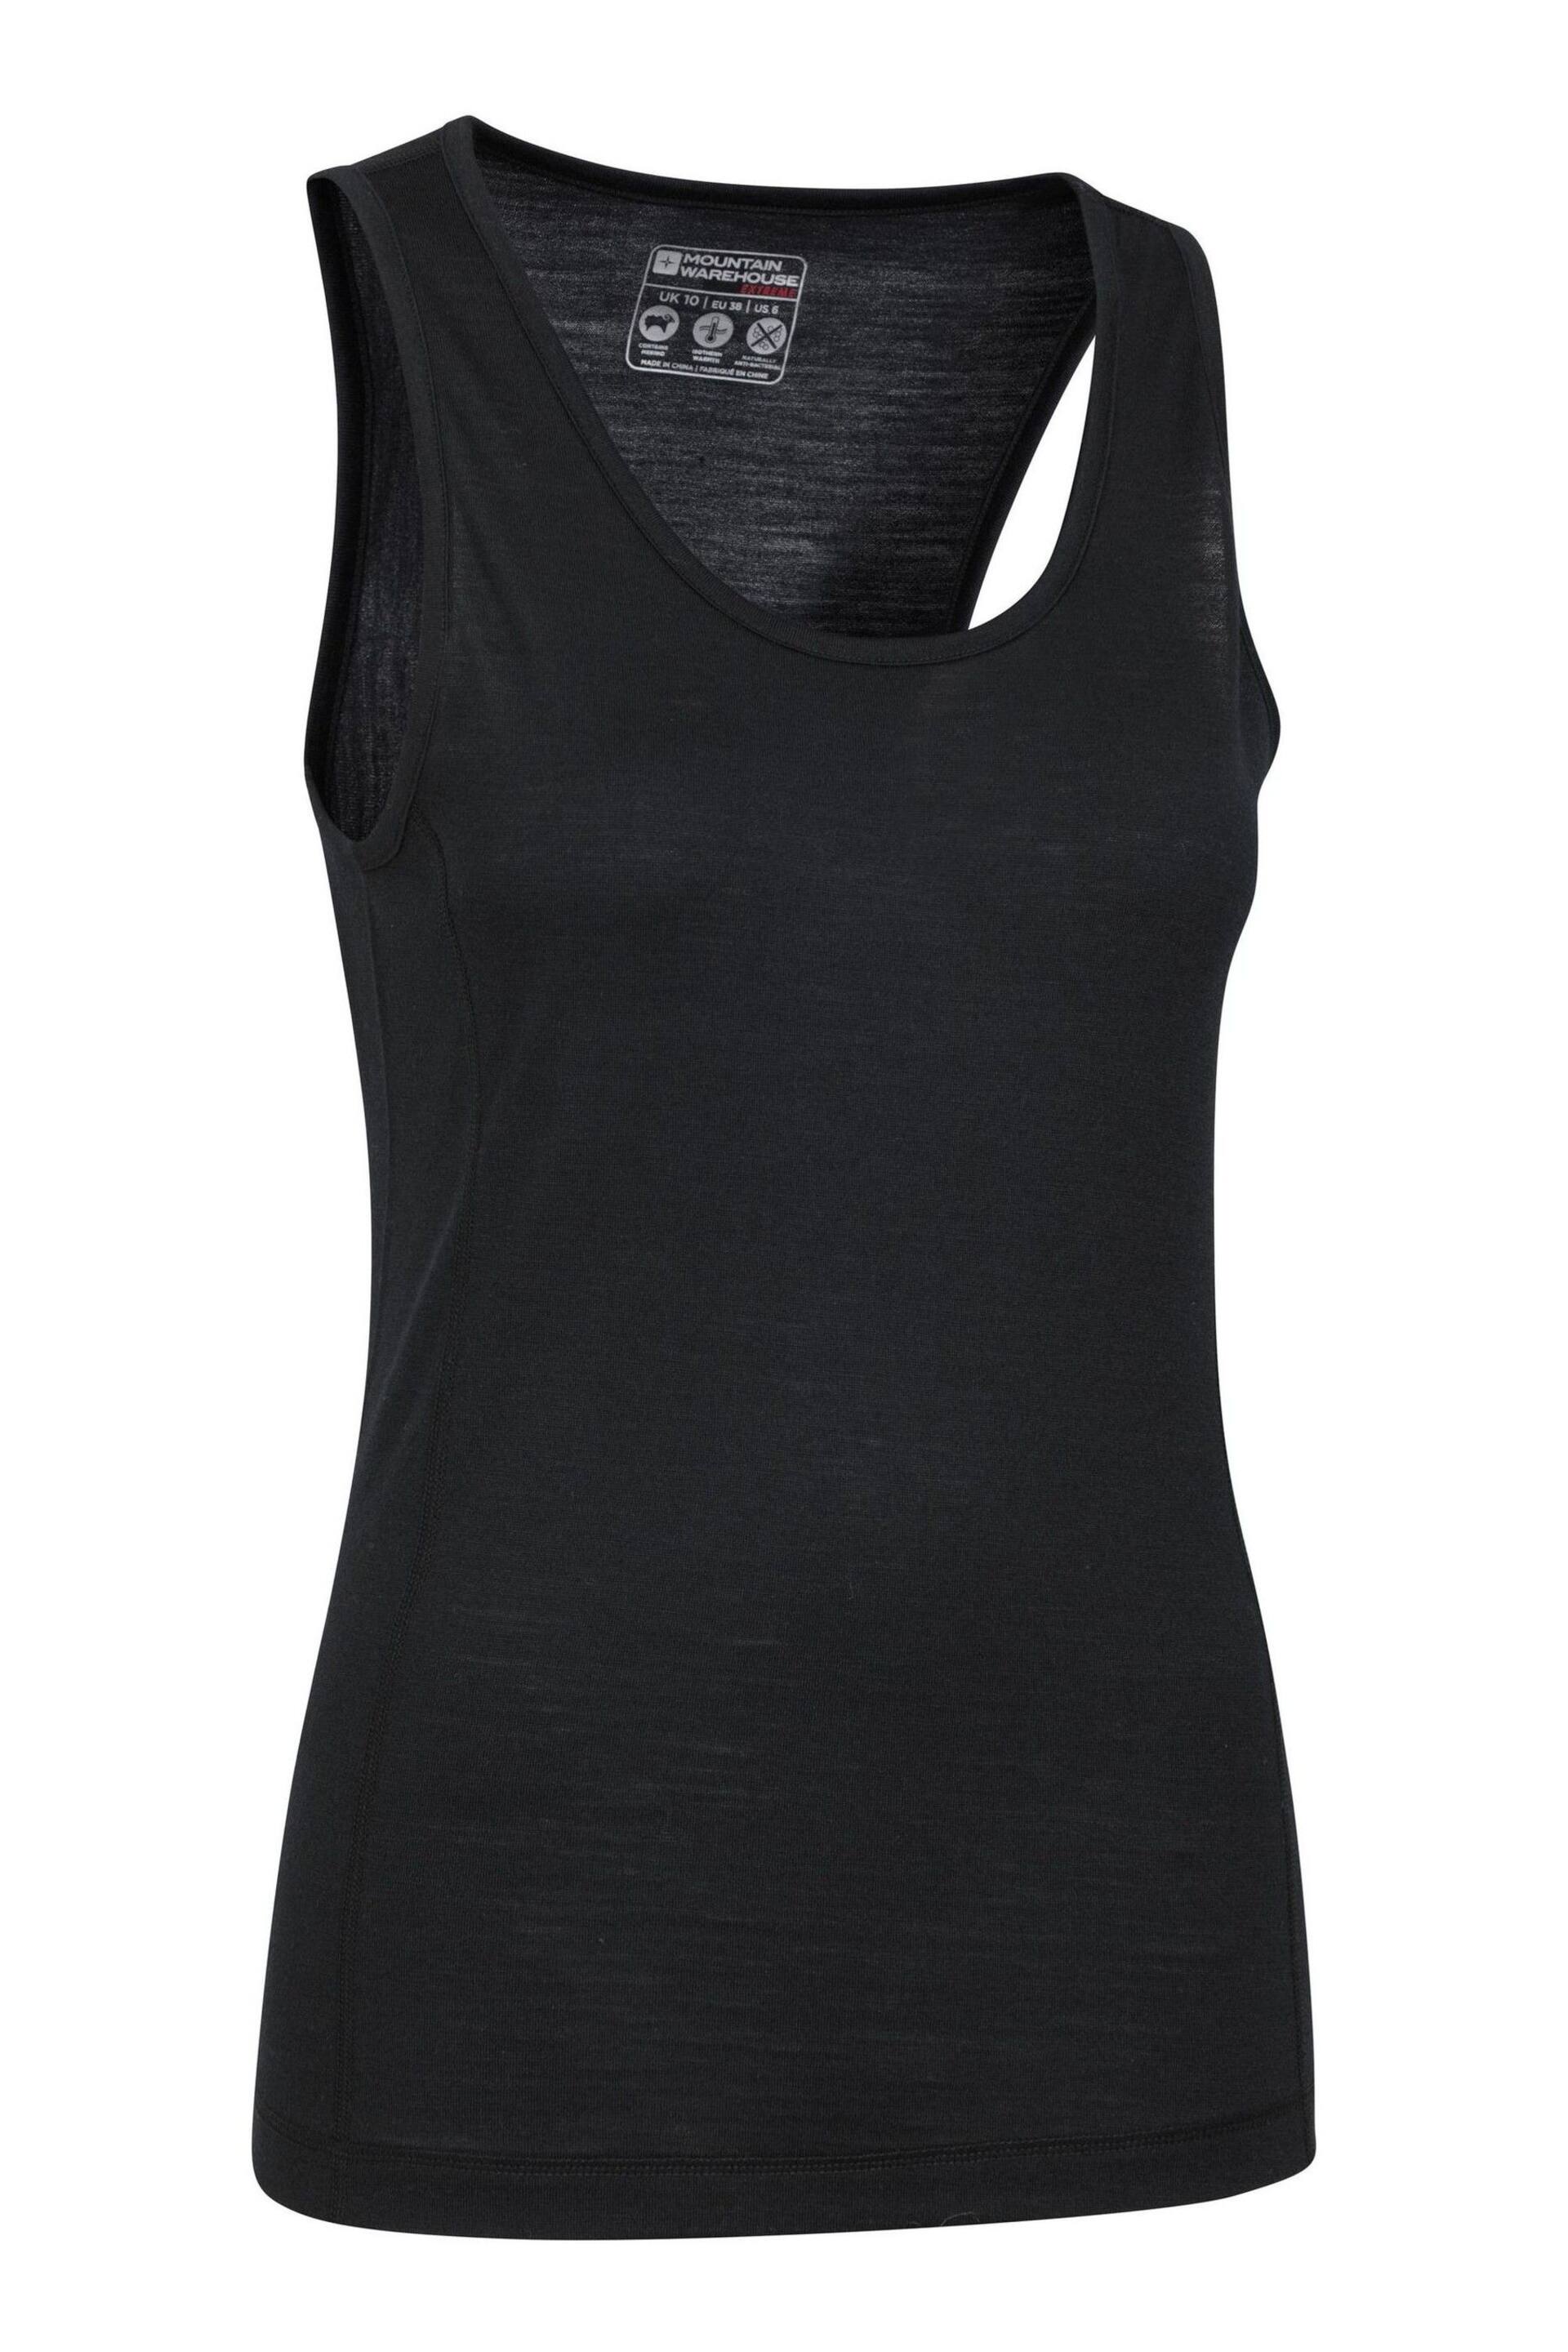 Mountain Warehouse Black Womens Merino Thermal Vest Top - Image 4 of 5